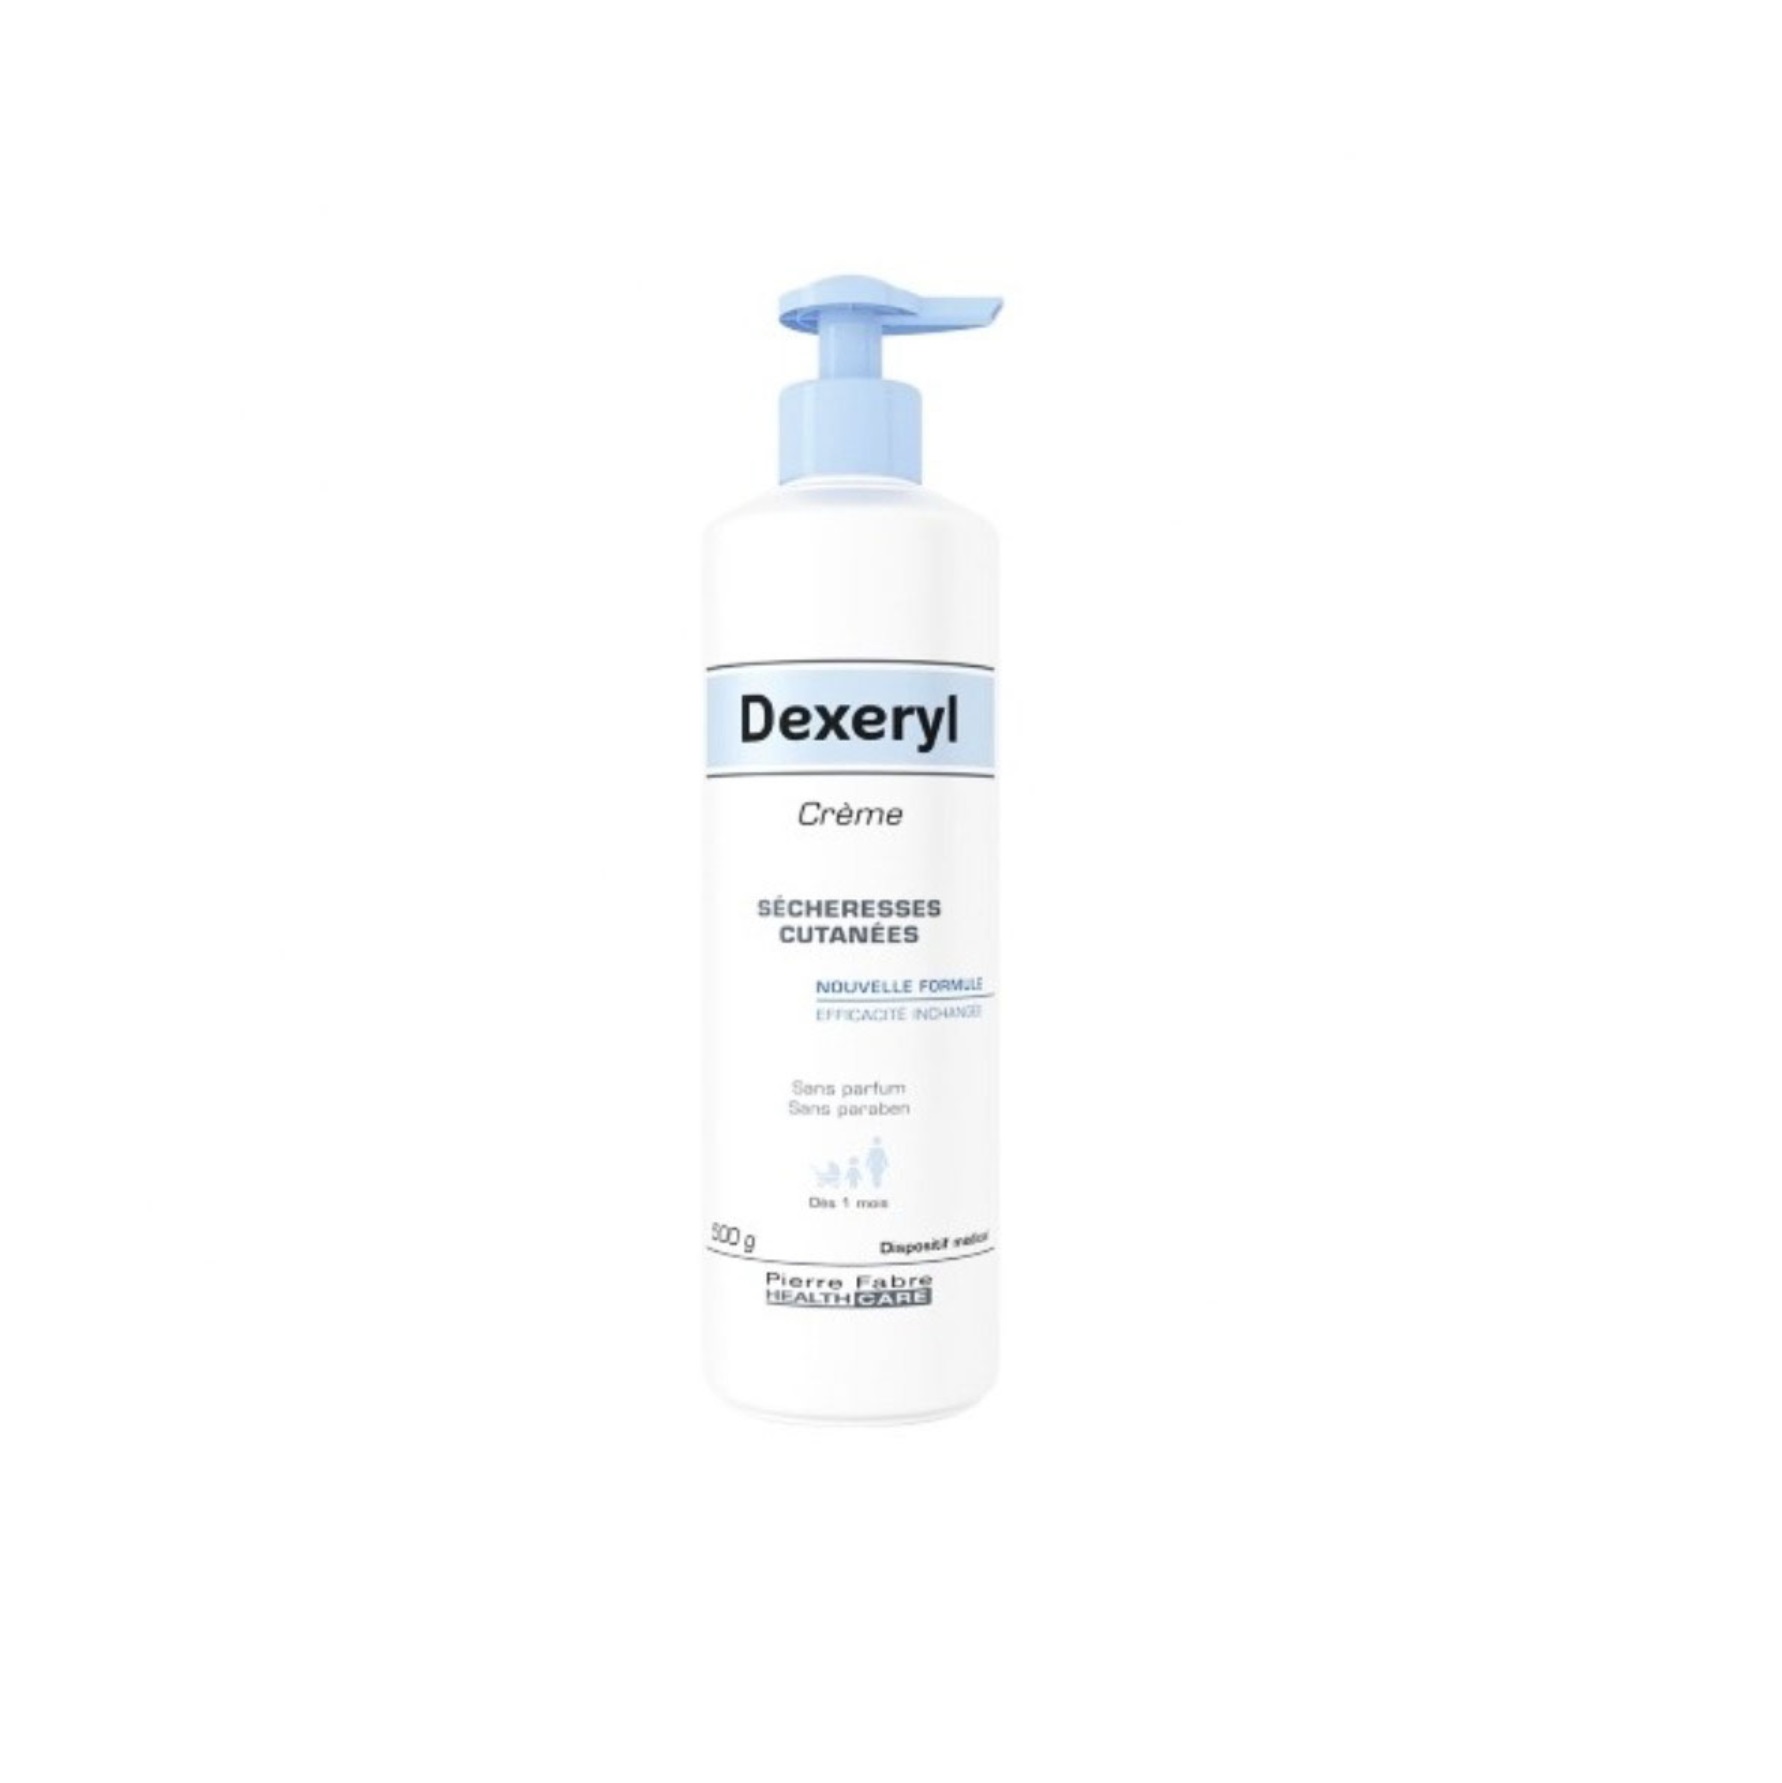 Buy Dexeryl Cream online in the US pharmacy.